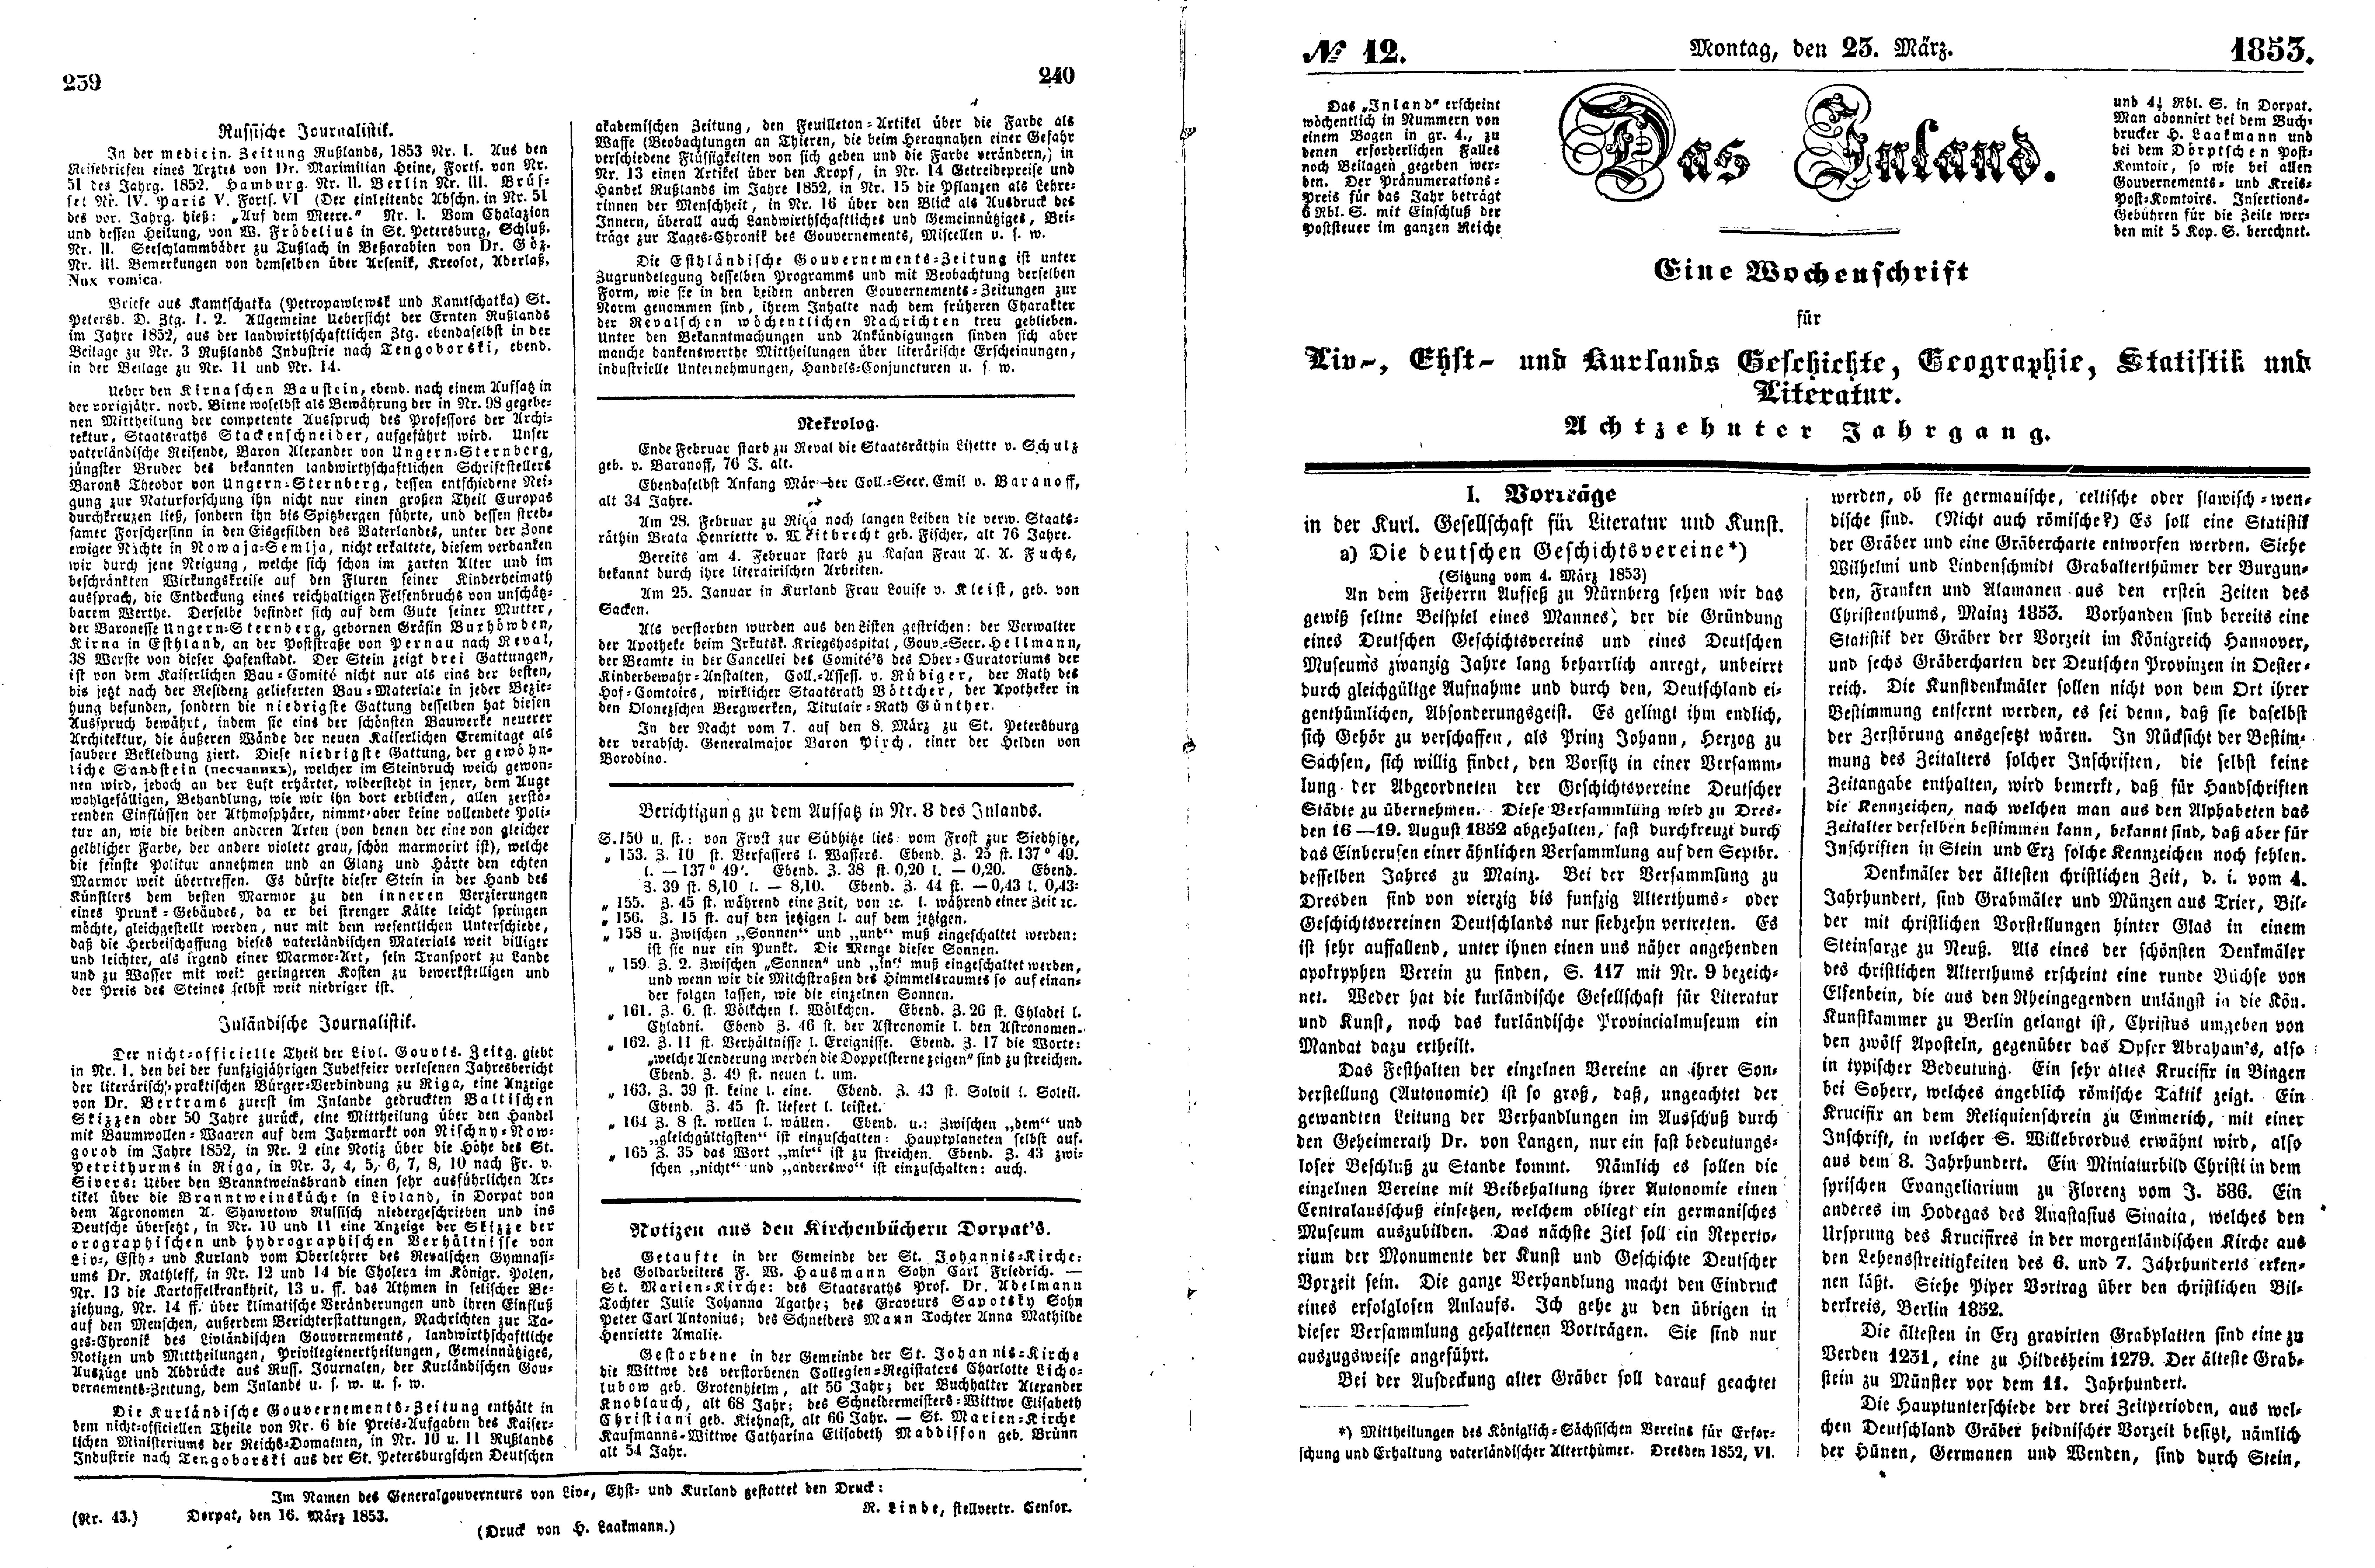 Das Inland [18] (1853) | 70. (239-242) Main body of text